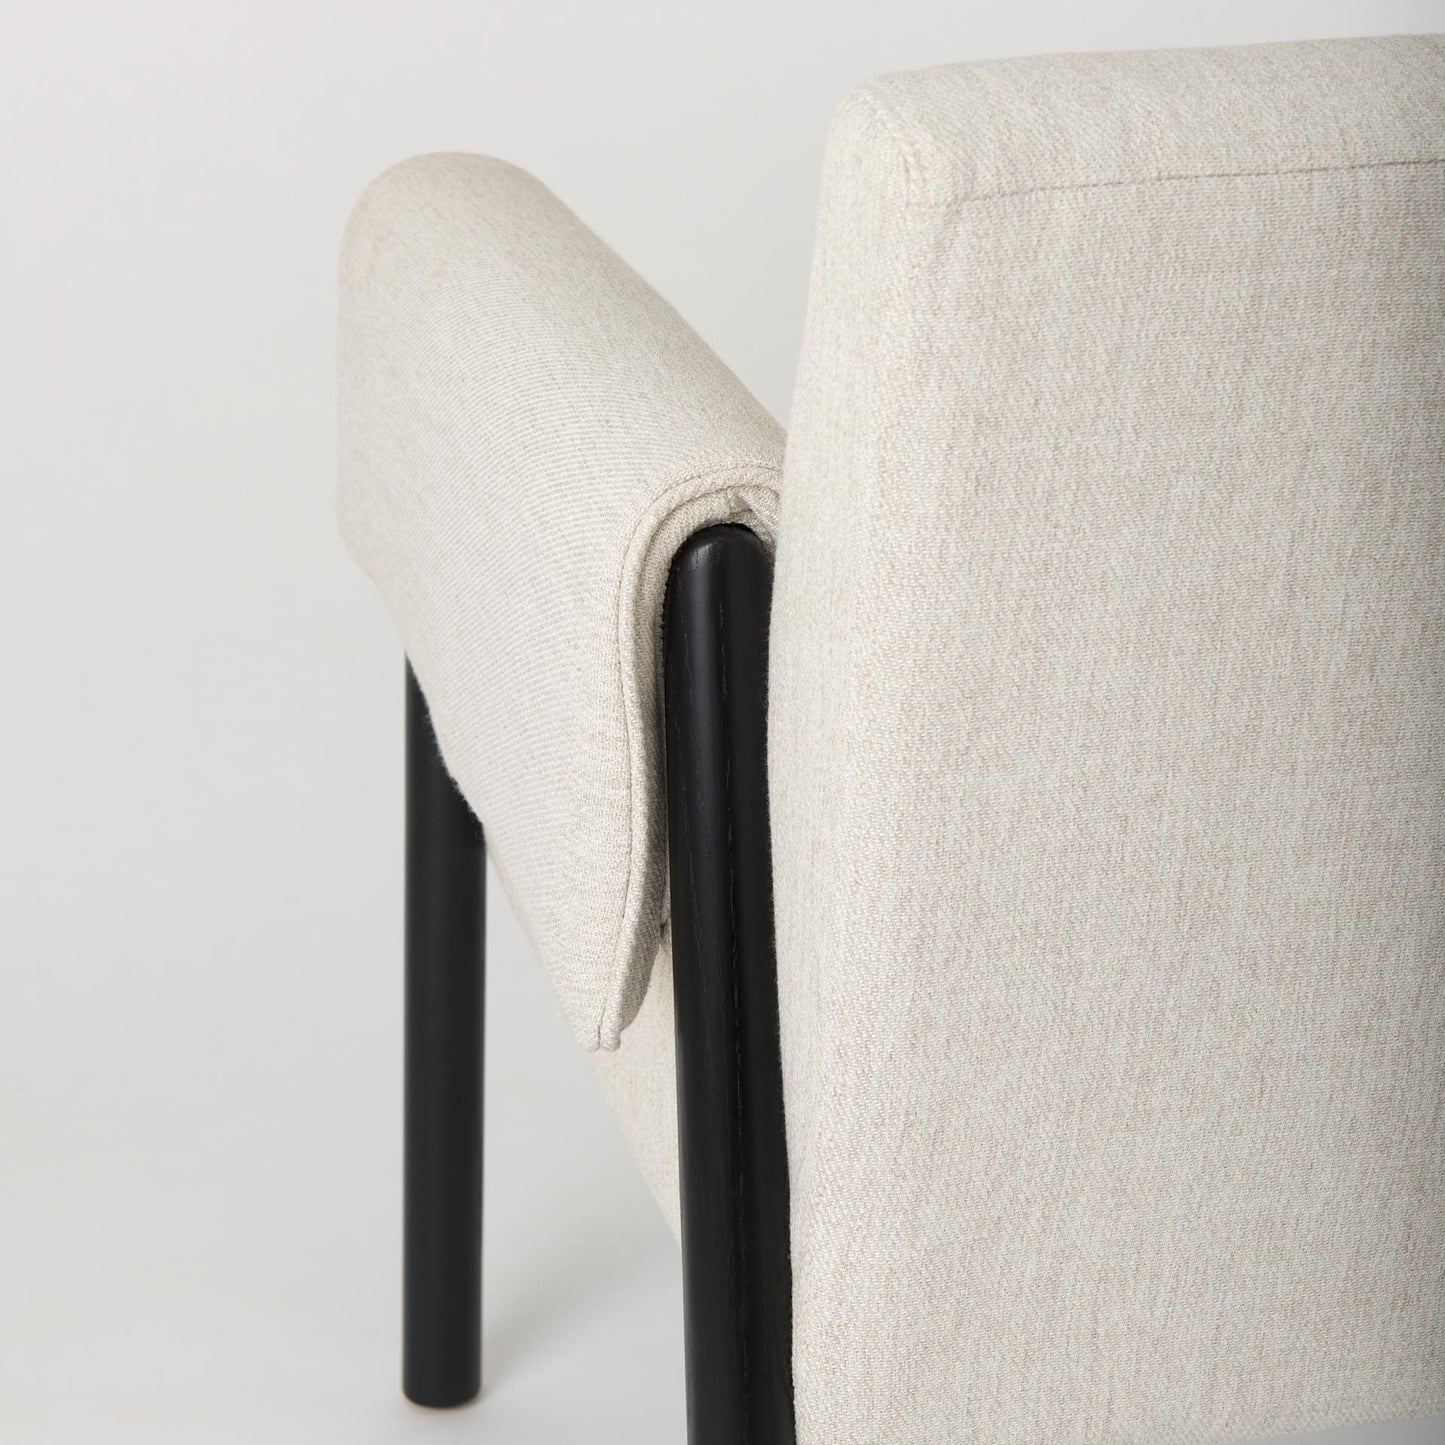 Ashton Beige Twill Fabric w/ Black Wood Accent Chair